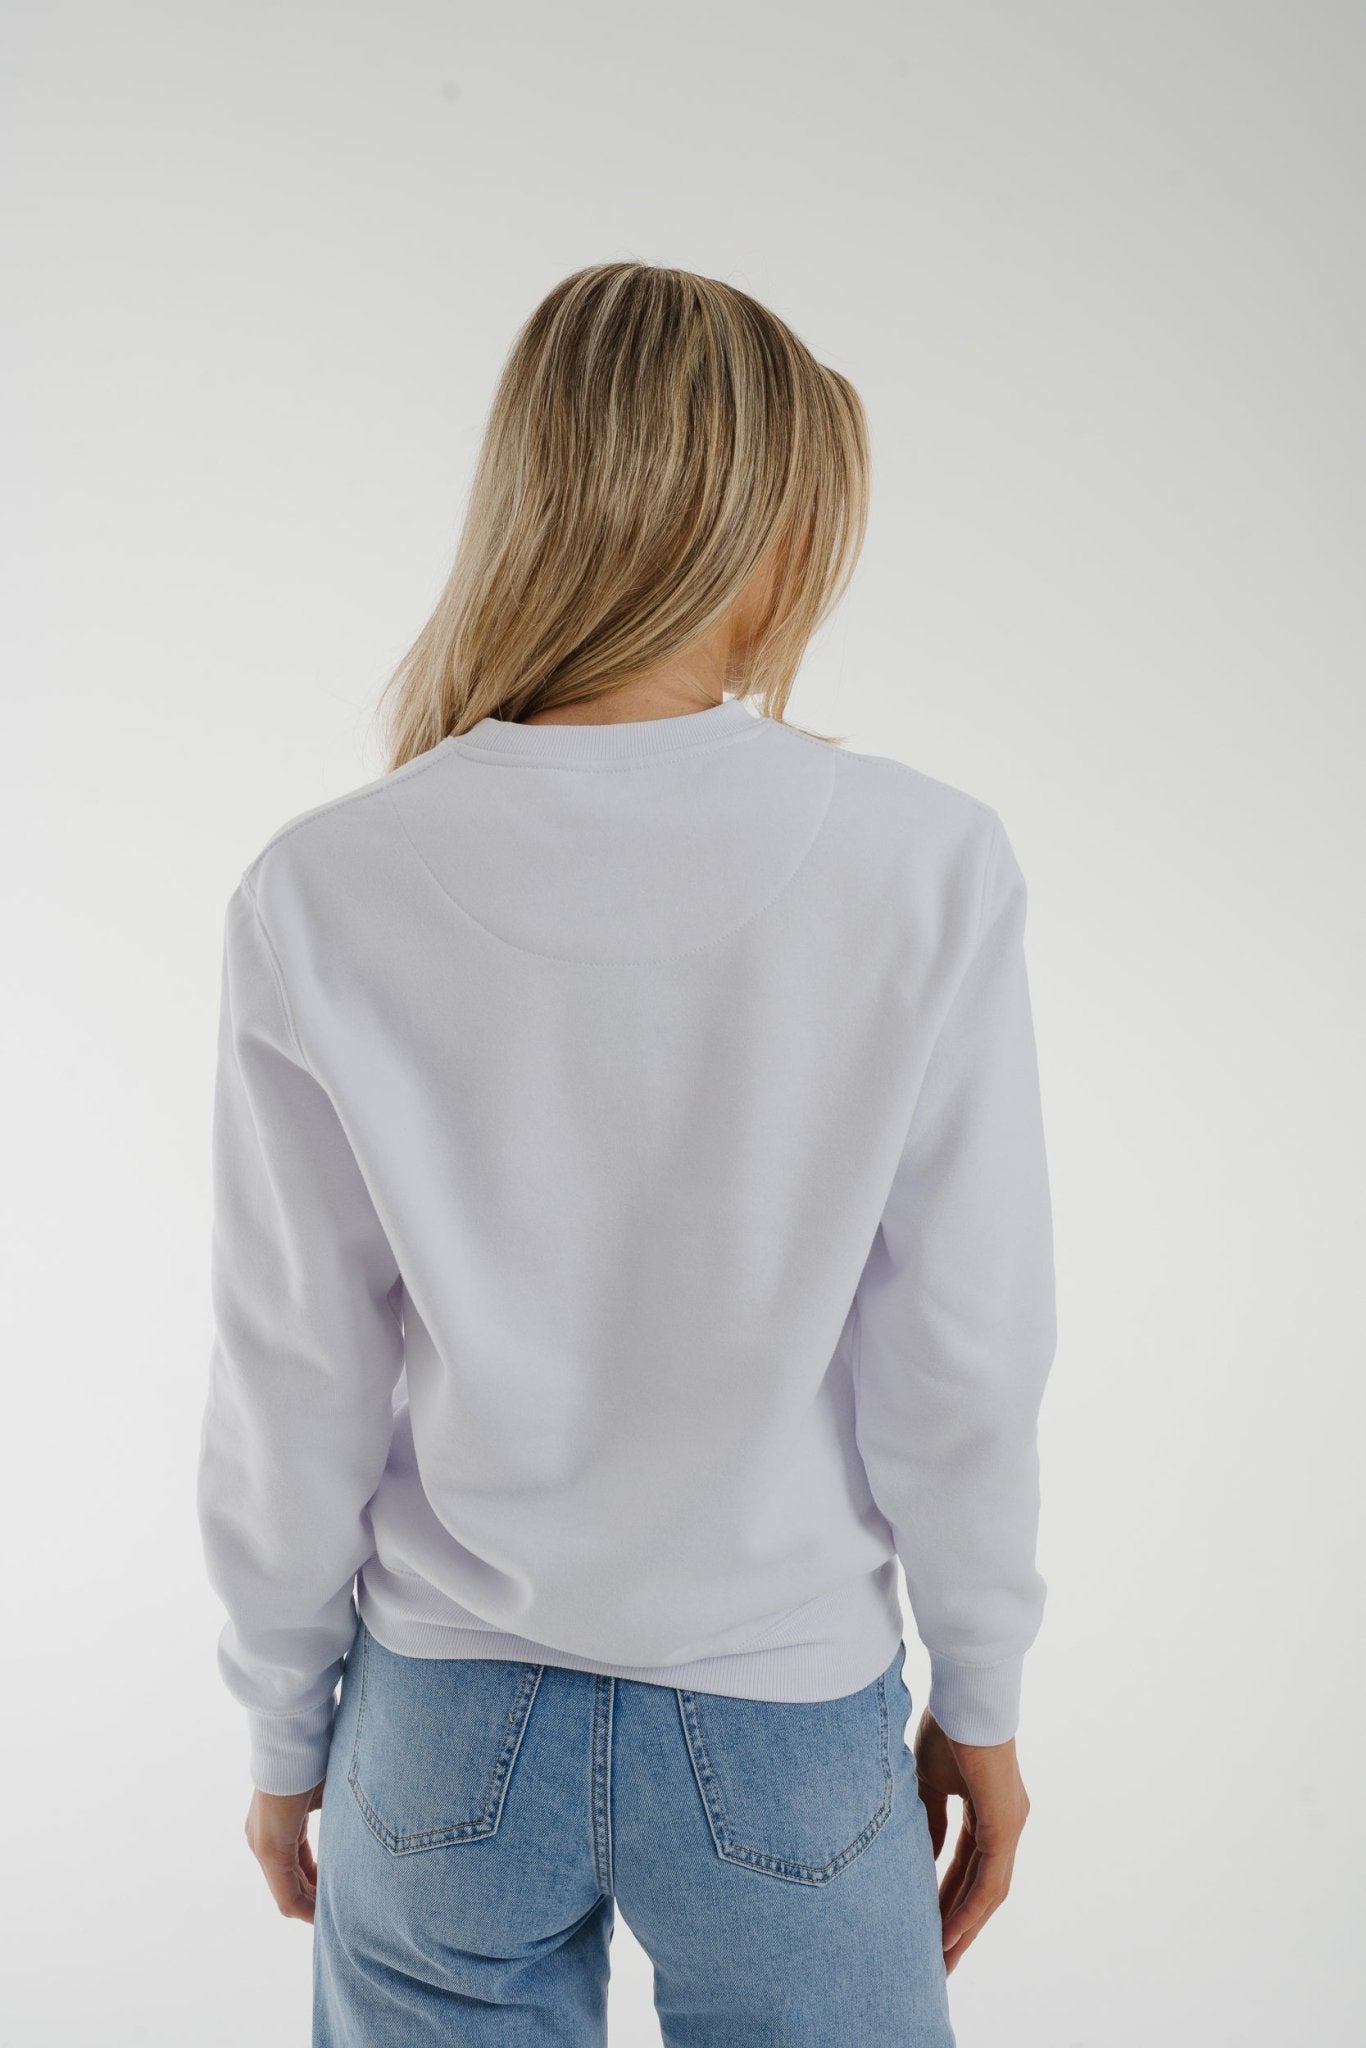 Polly Graphic Sweatshirt In White - The Walk in Wardrobe